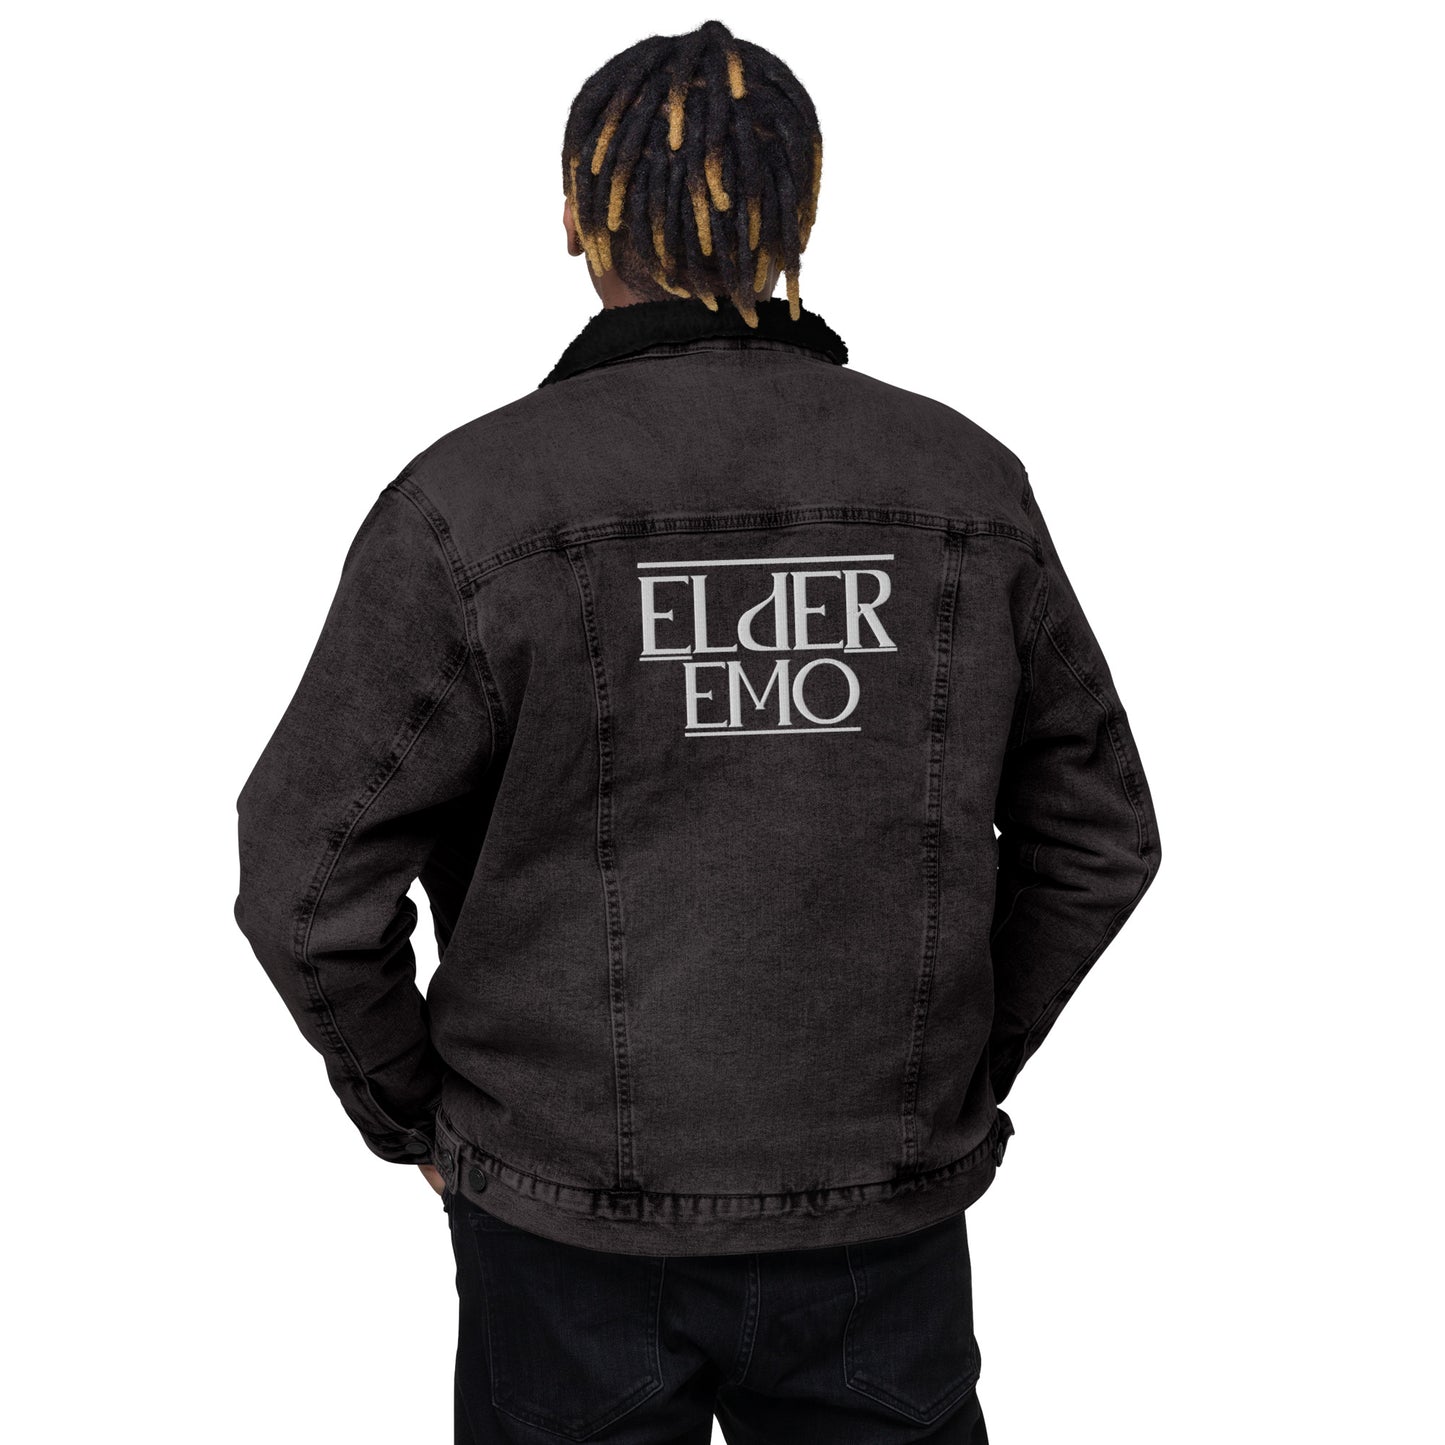 Elder Emo - denim sherpa jacket